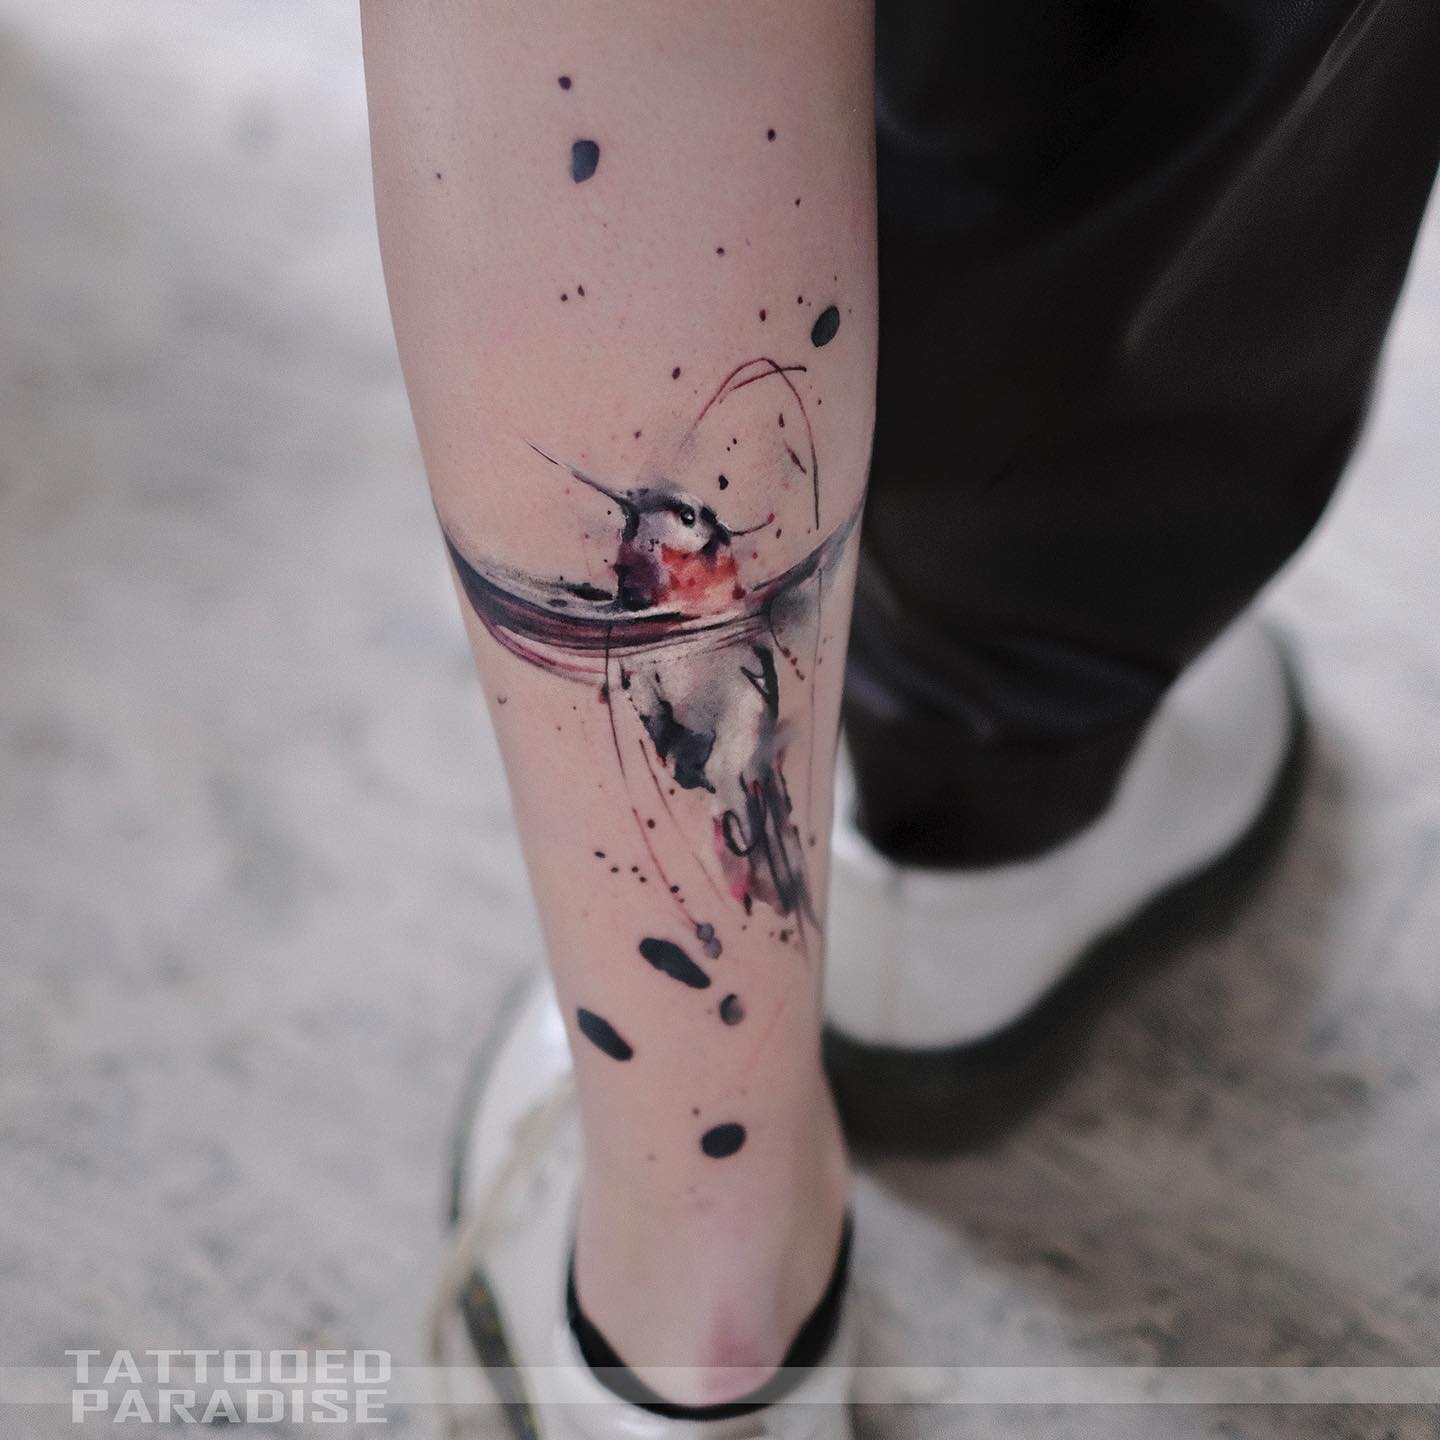 Watercolor tattoo on leg by aleksandrakatsan